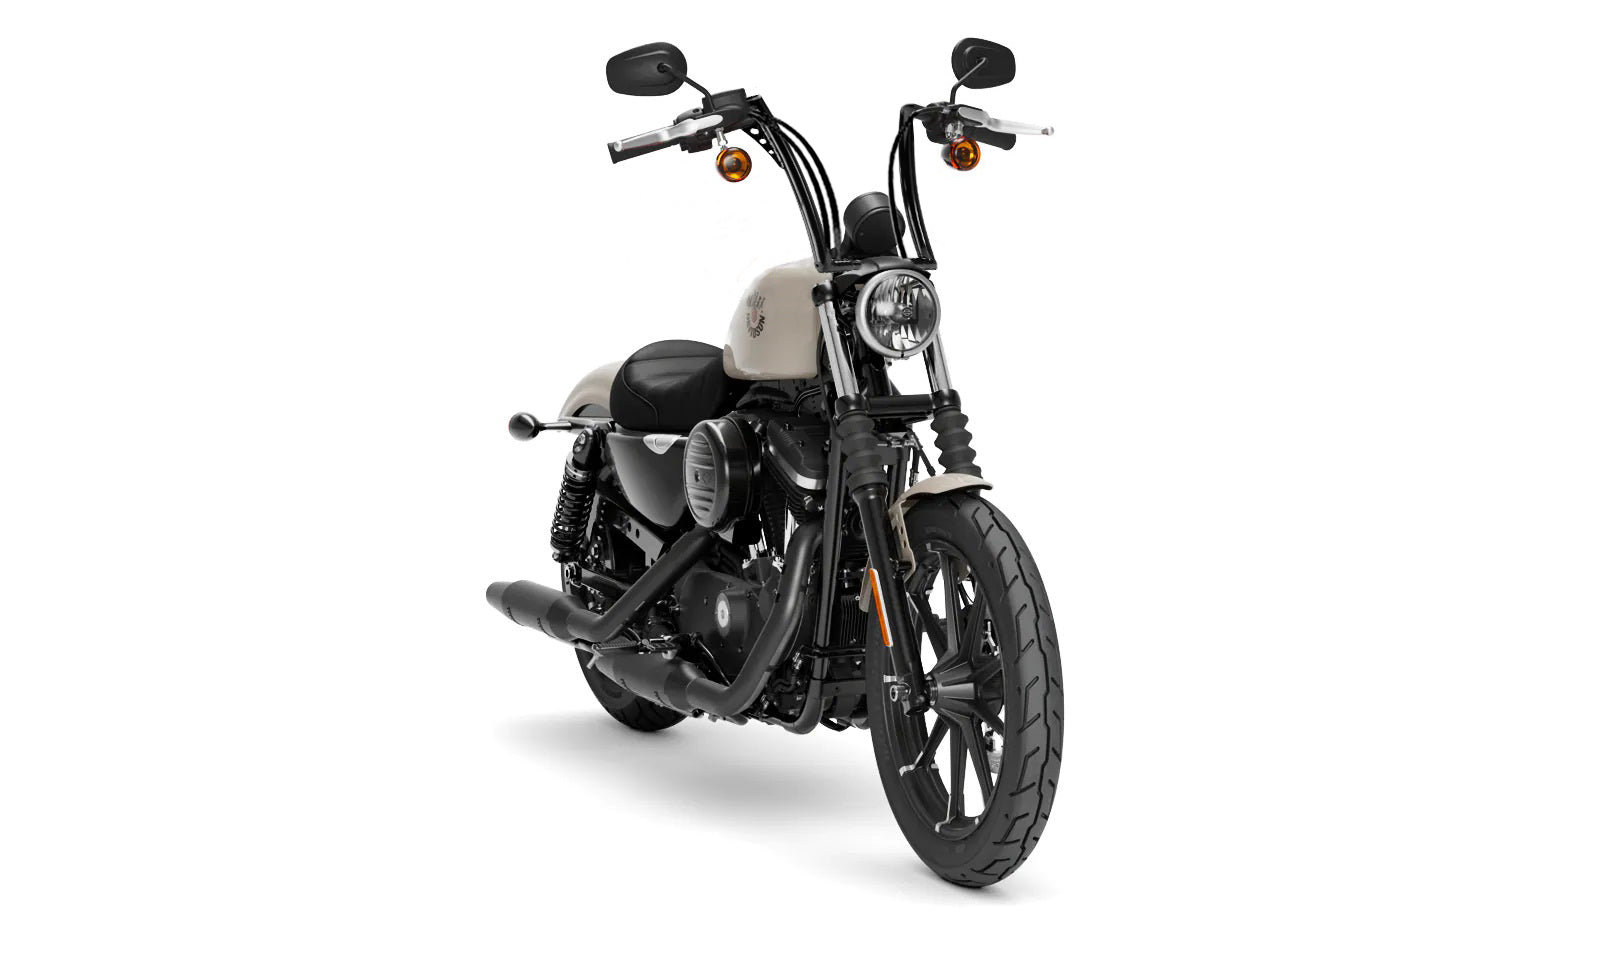 Viking Iron Born 12" Handlebar For Harley Sportster 883 Iron XL883N Gloss Black Bag on Bike View @expand